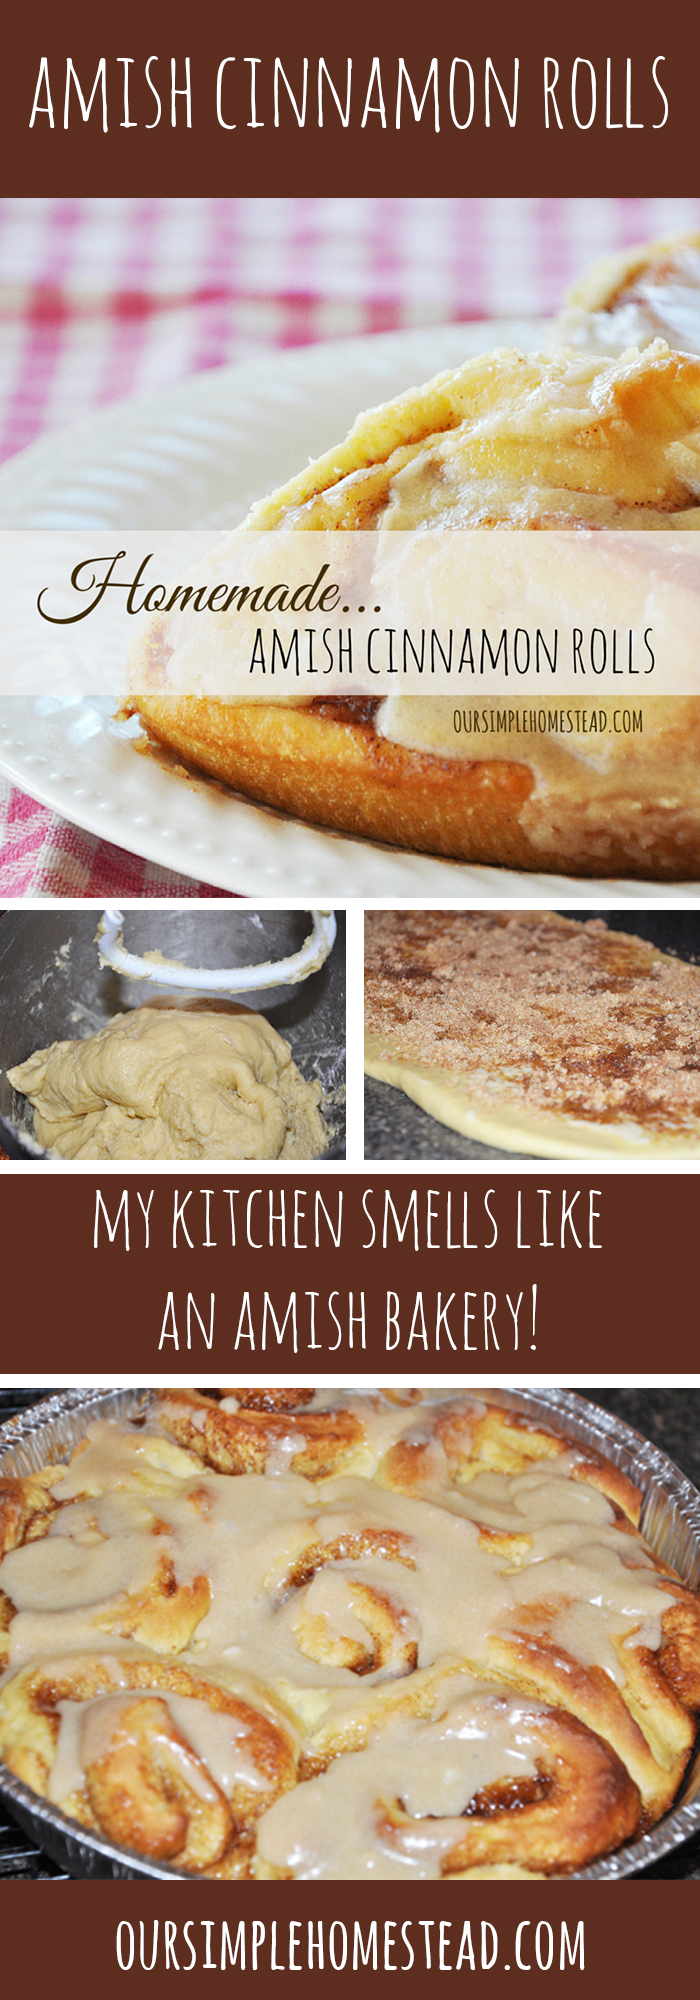 Amish bakery homestead